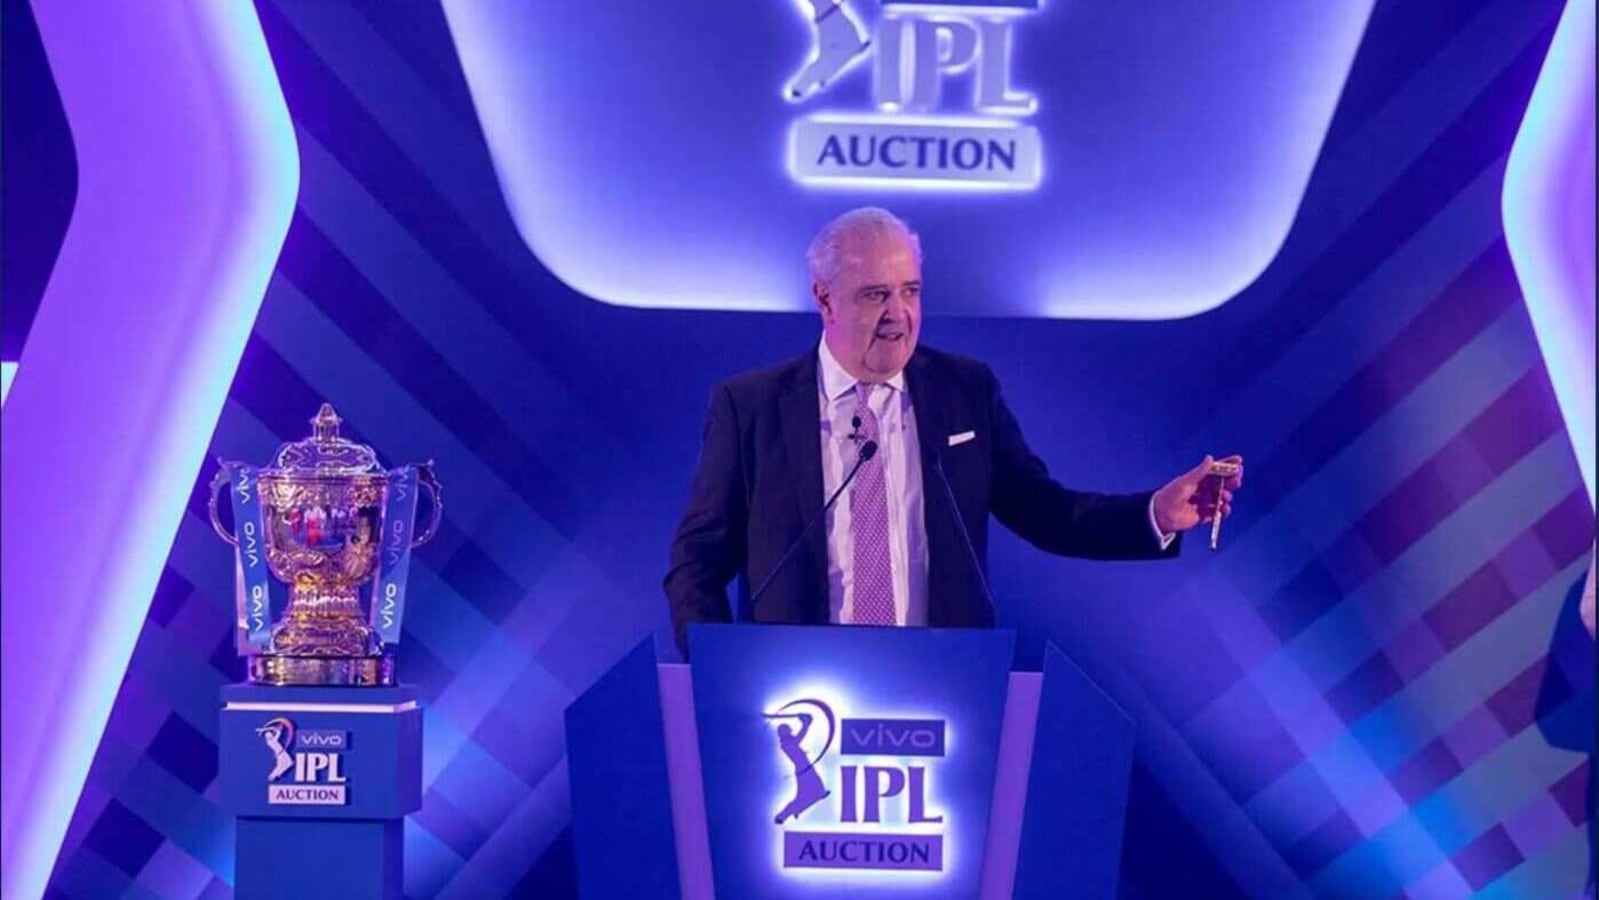 IPL Auction 2021 Highlights Chris Morris biggest buy at ₹16.25 crore Hindustan Times